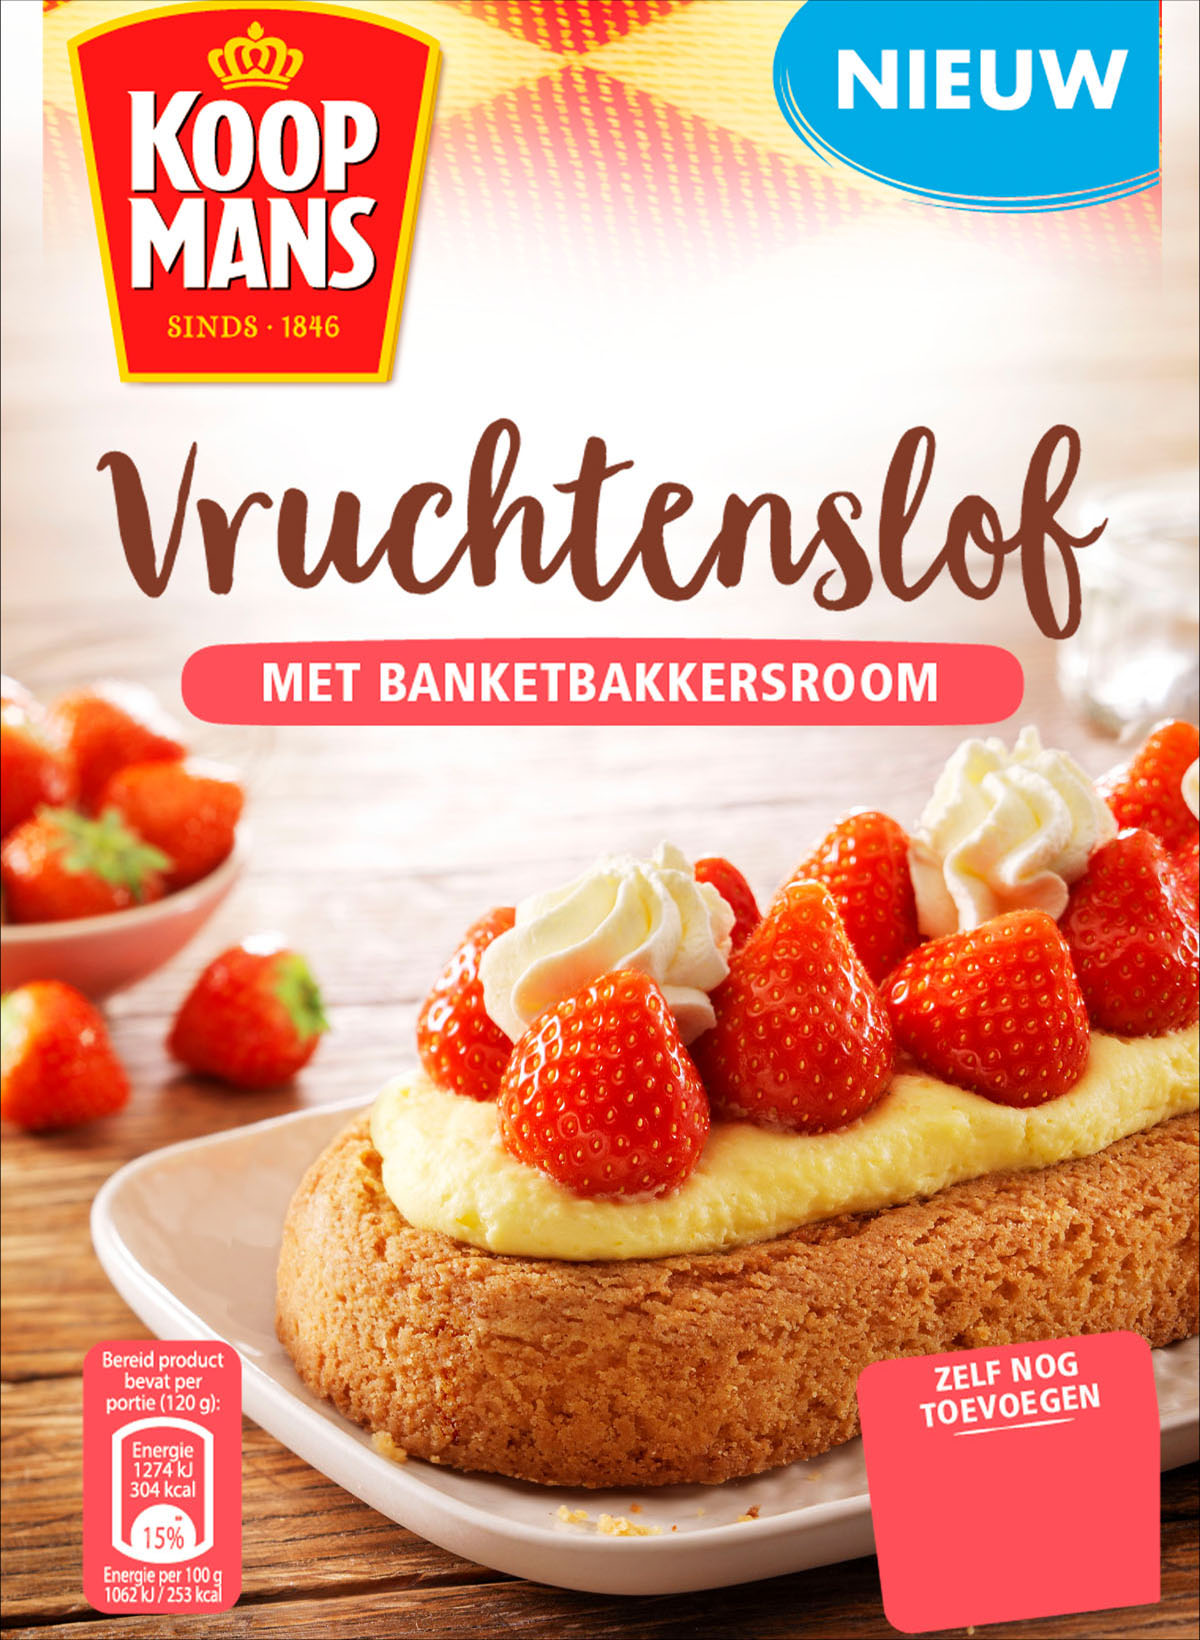 Koopmans Vruchtenslof pastry photography by STUDIO_M food photographer